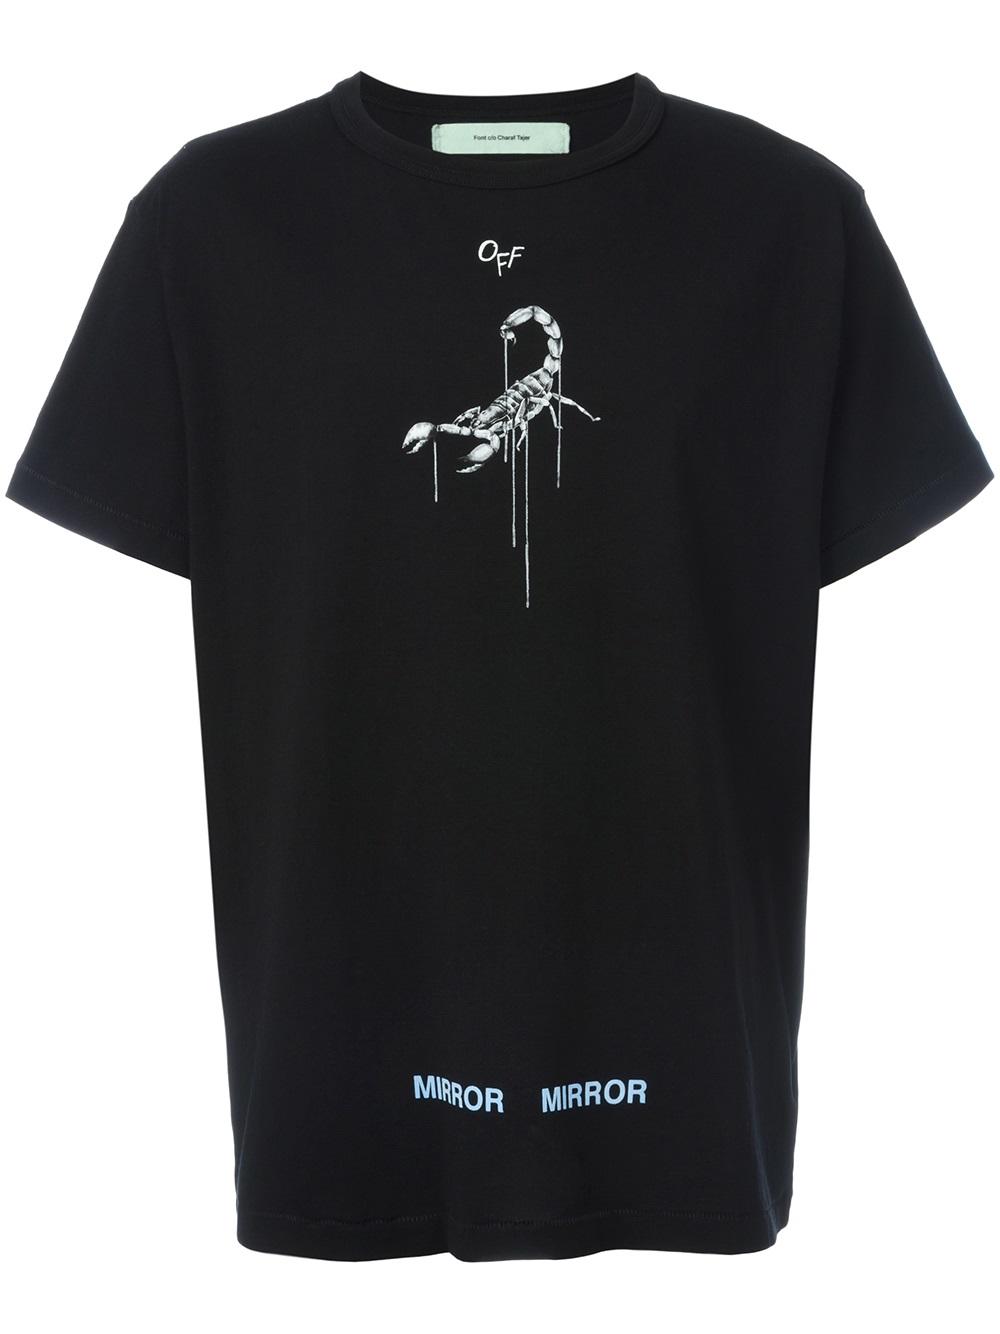 Off-White Othelo's Scorpion T-shirt BLACK Men Clothing T-Shirts